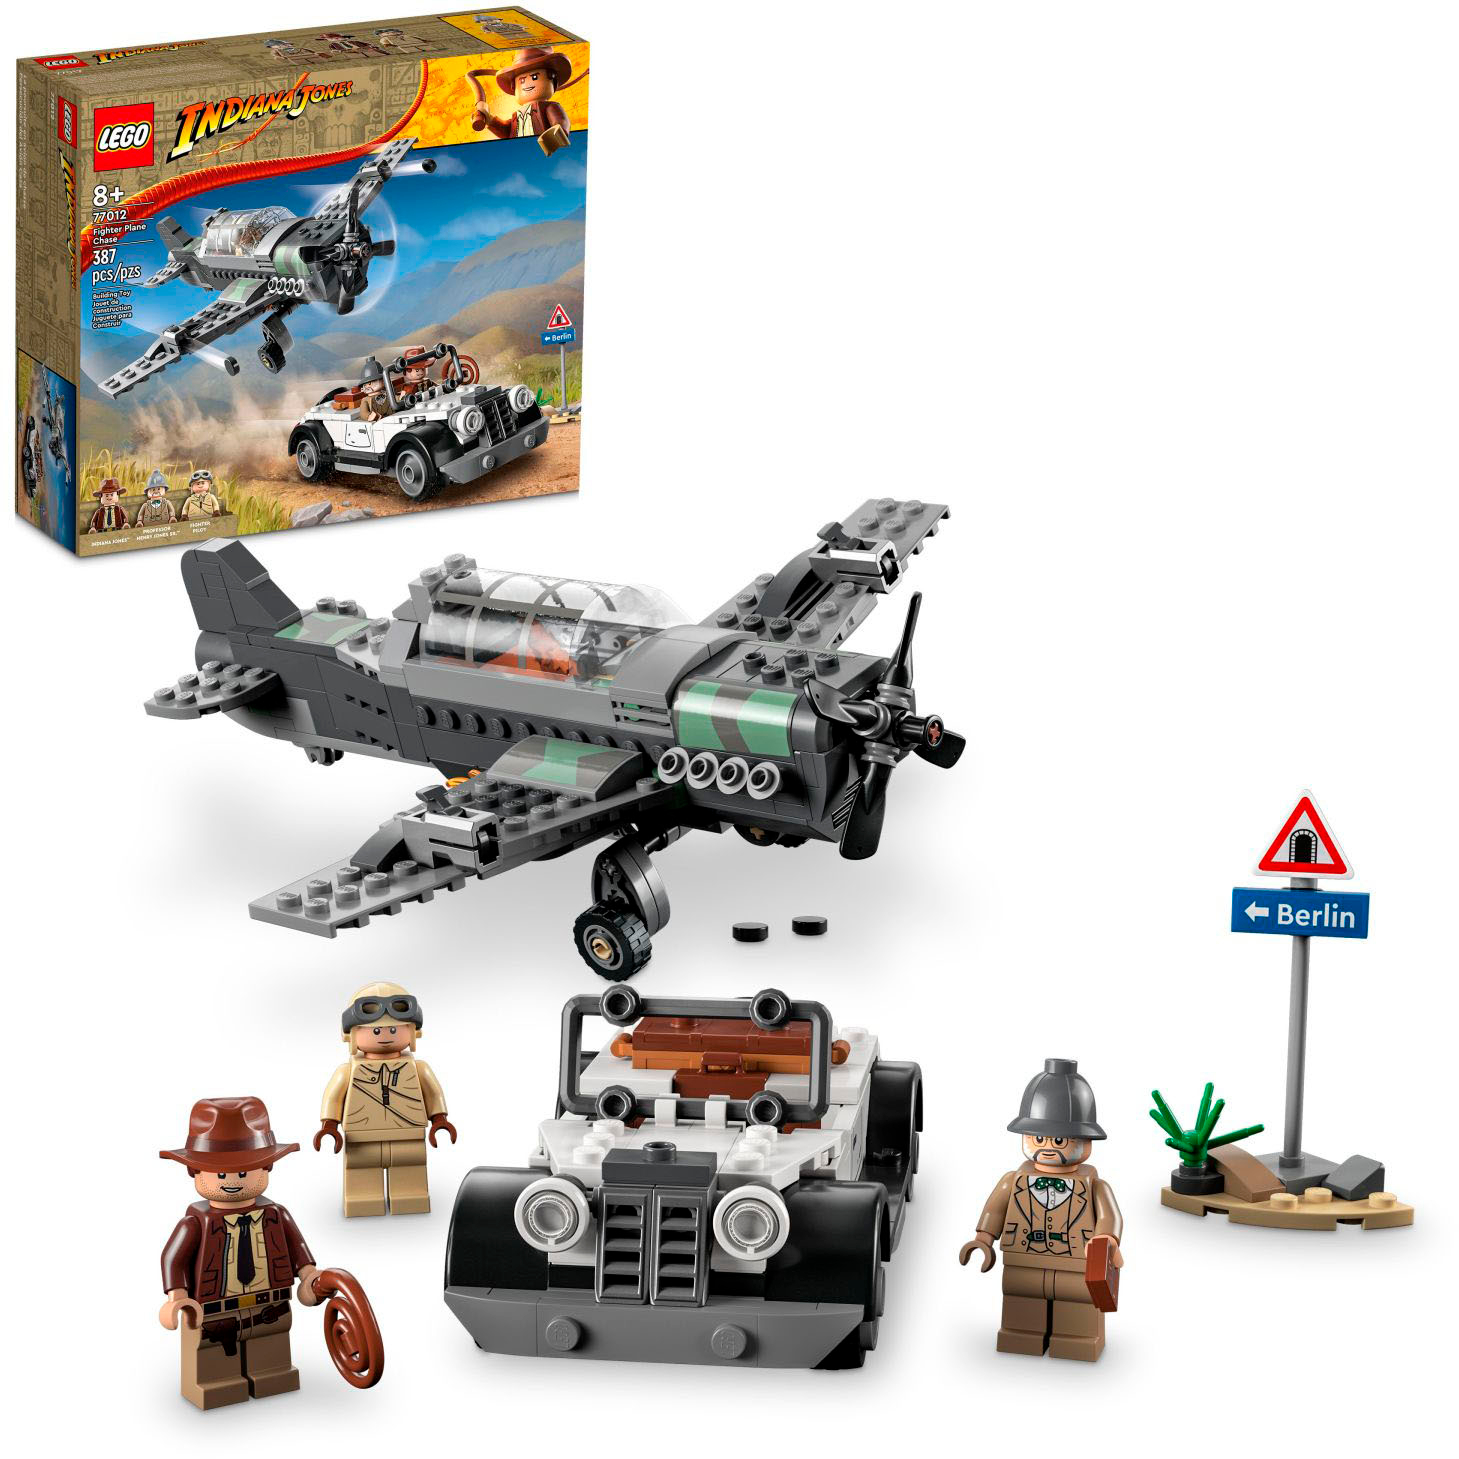 Fordi protektor Flock LEGO Indiana Jones Fighter Plane Chase 77012 6385843 - Best Buy